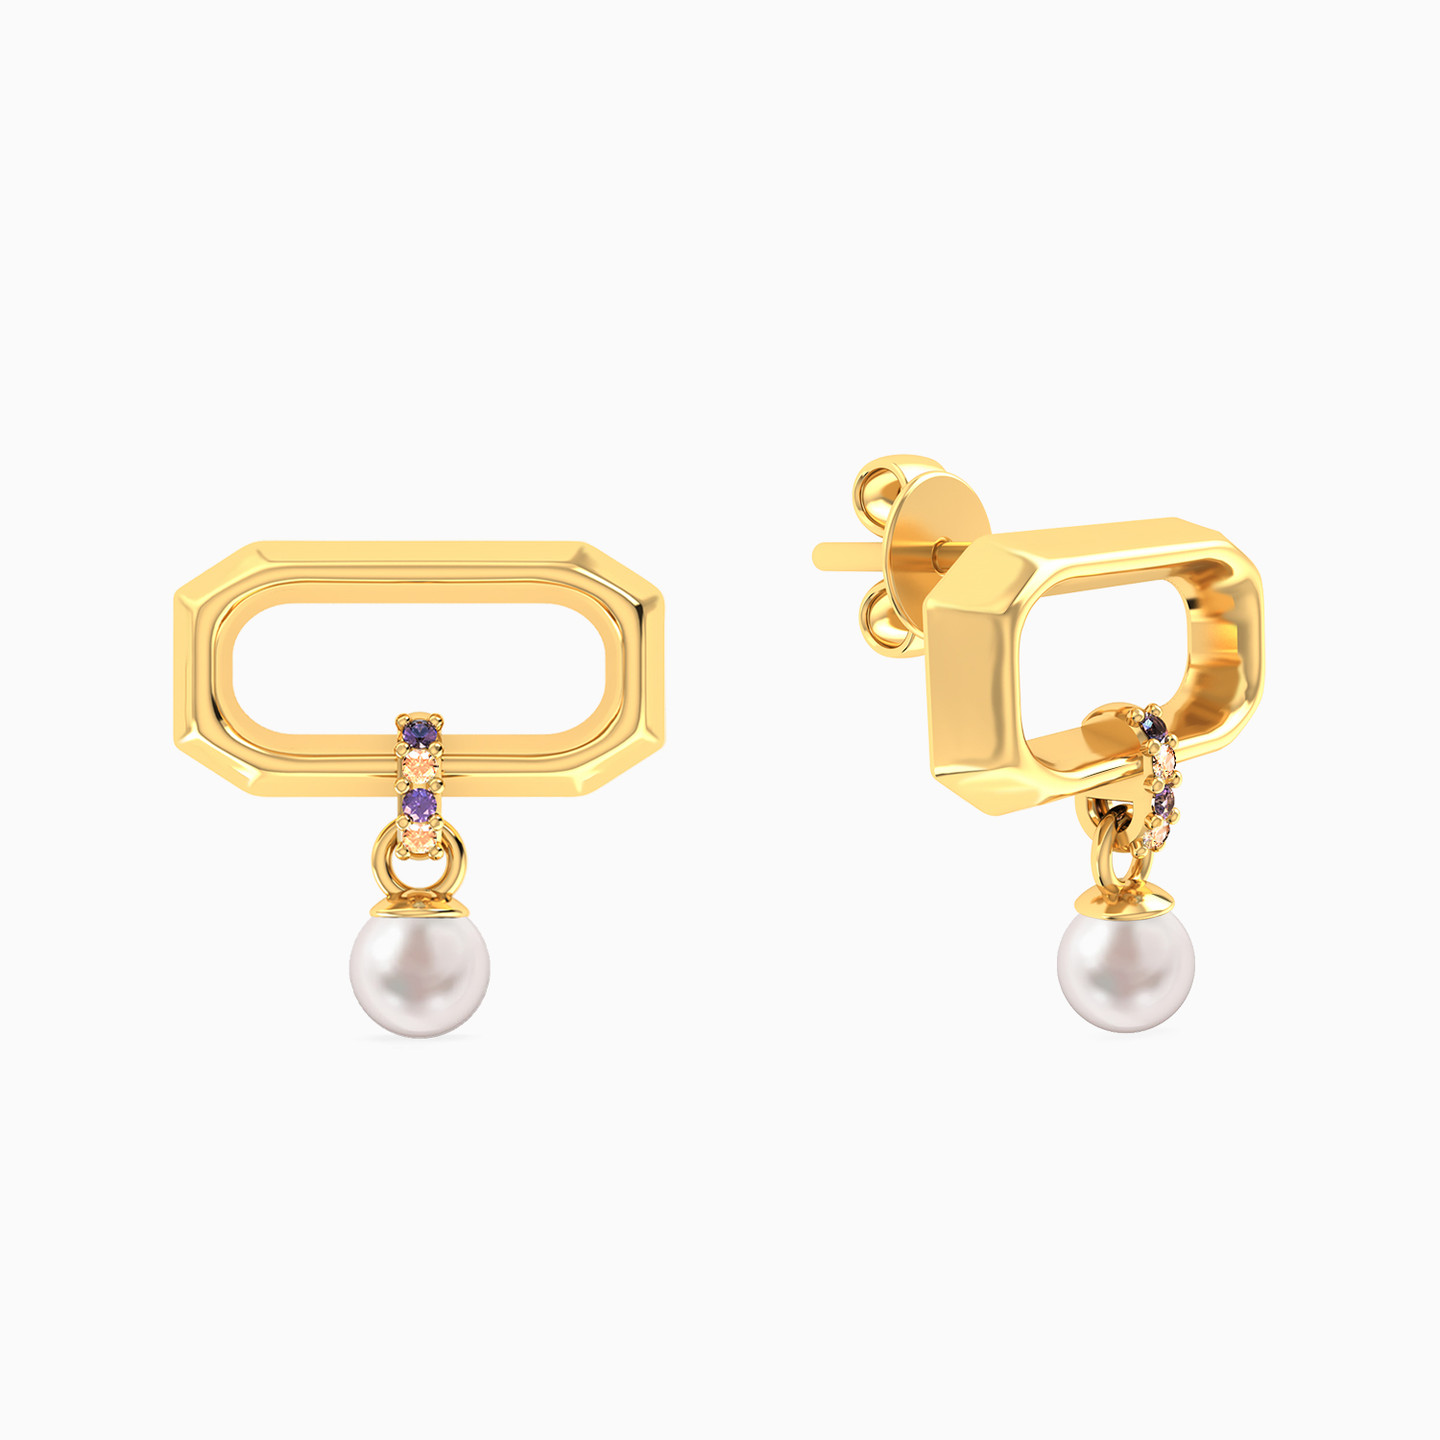 14K Gold Pearl & Colored Stones Drop Earrings - 2